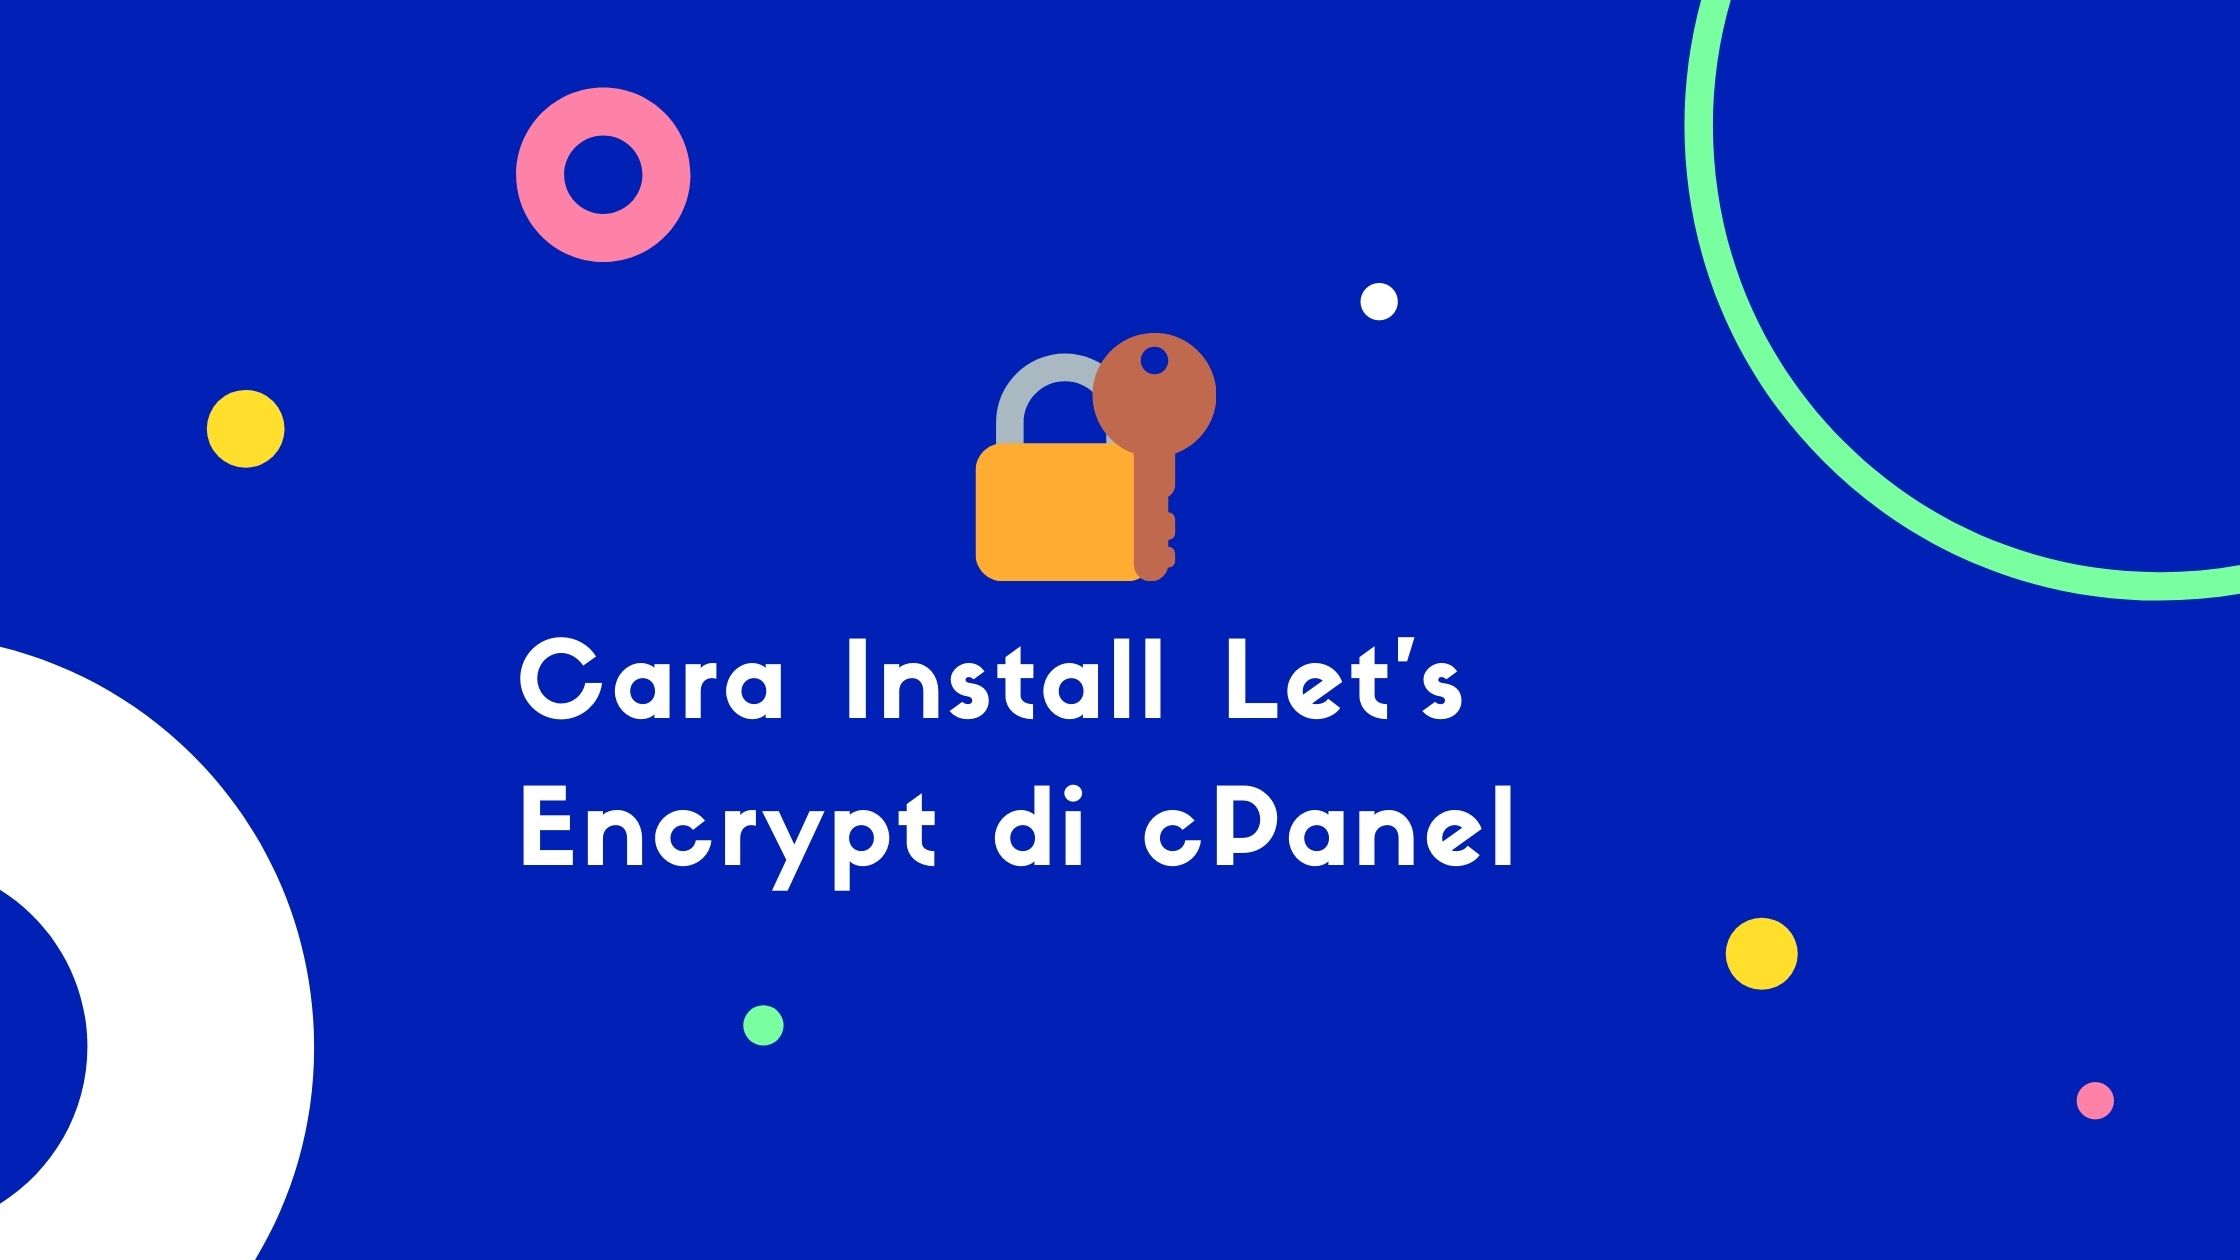 Cara Install Lets Encrypt di cPanel 1 Cara Install Let's Encrypt di cPanel dengan Mudah